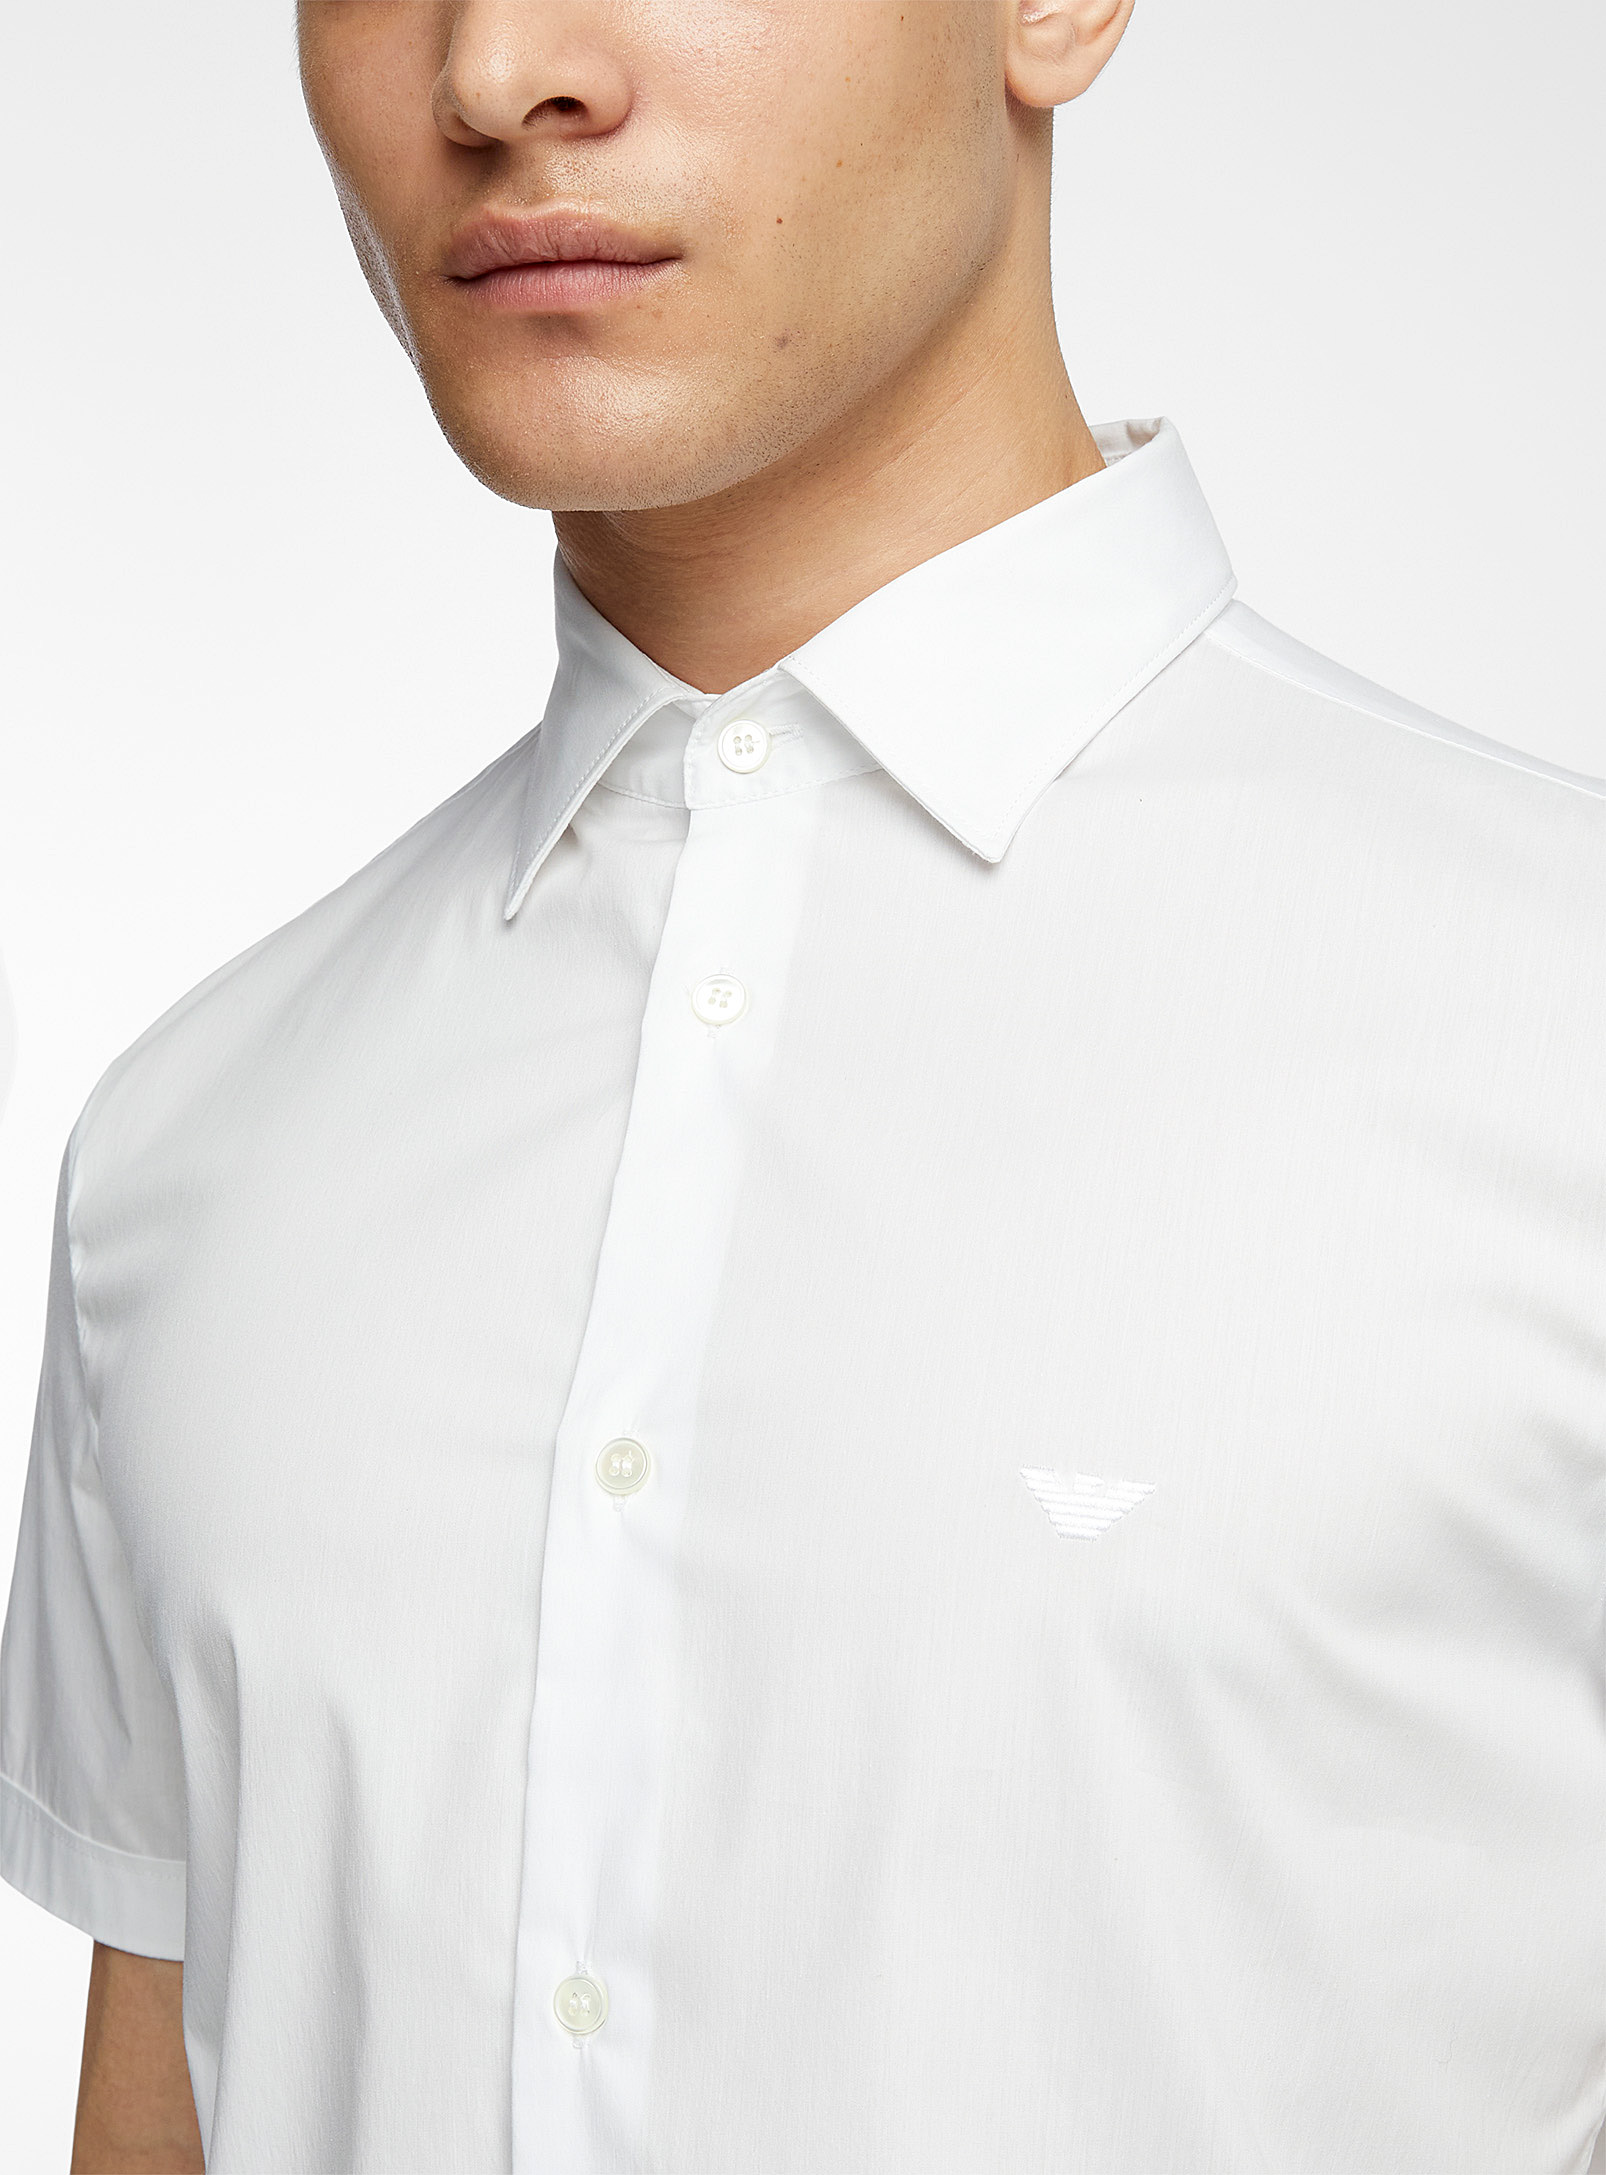 Emporio Armani - La chemise logo brodé manches courtes